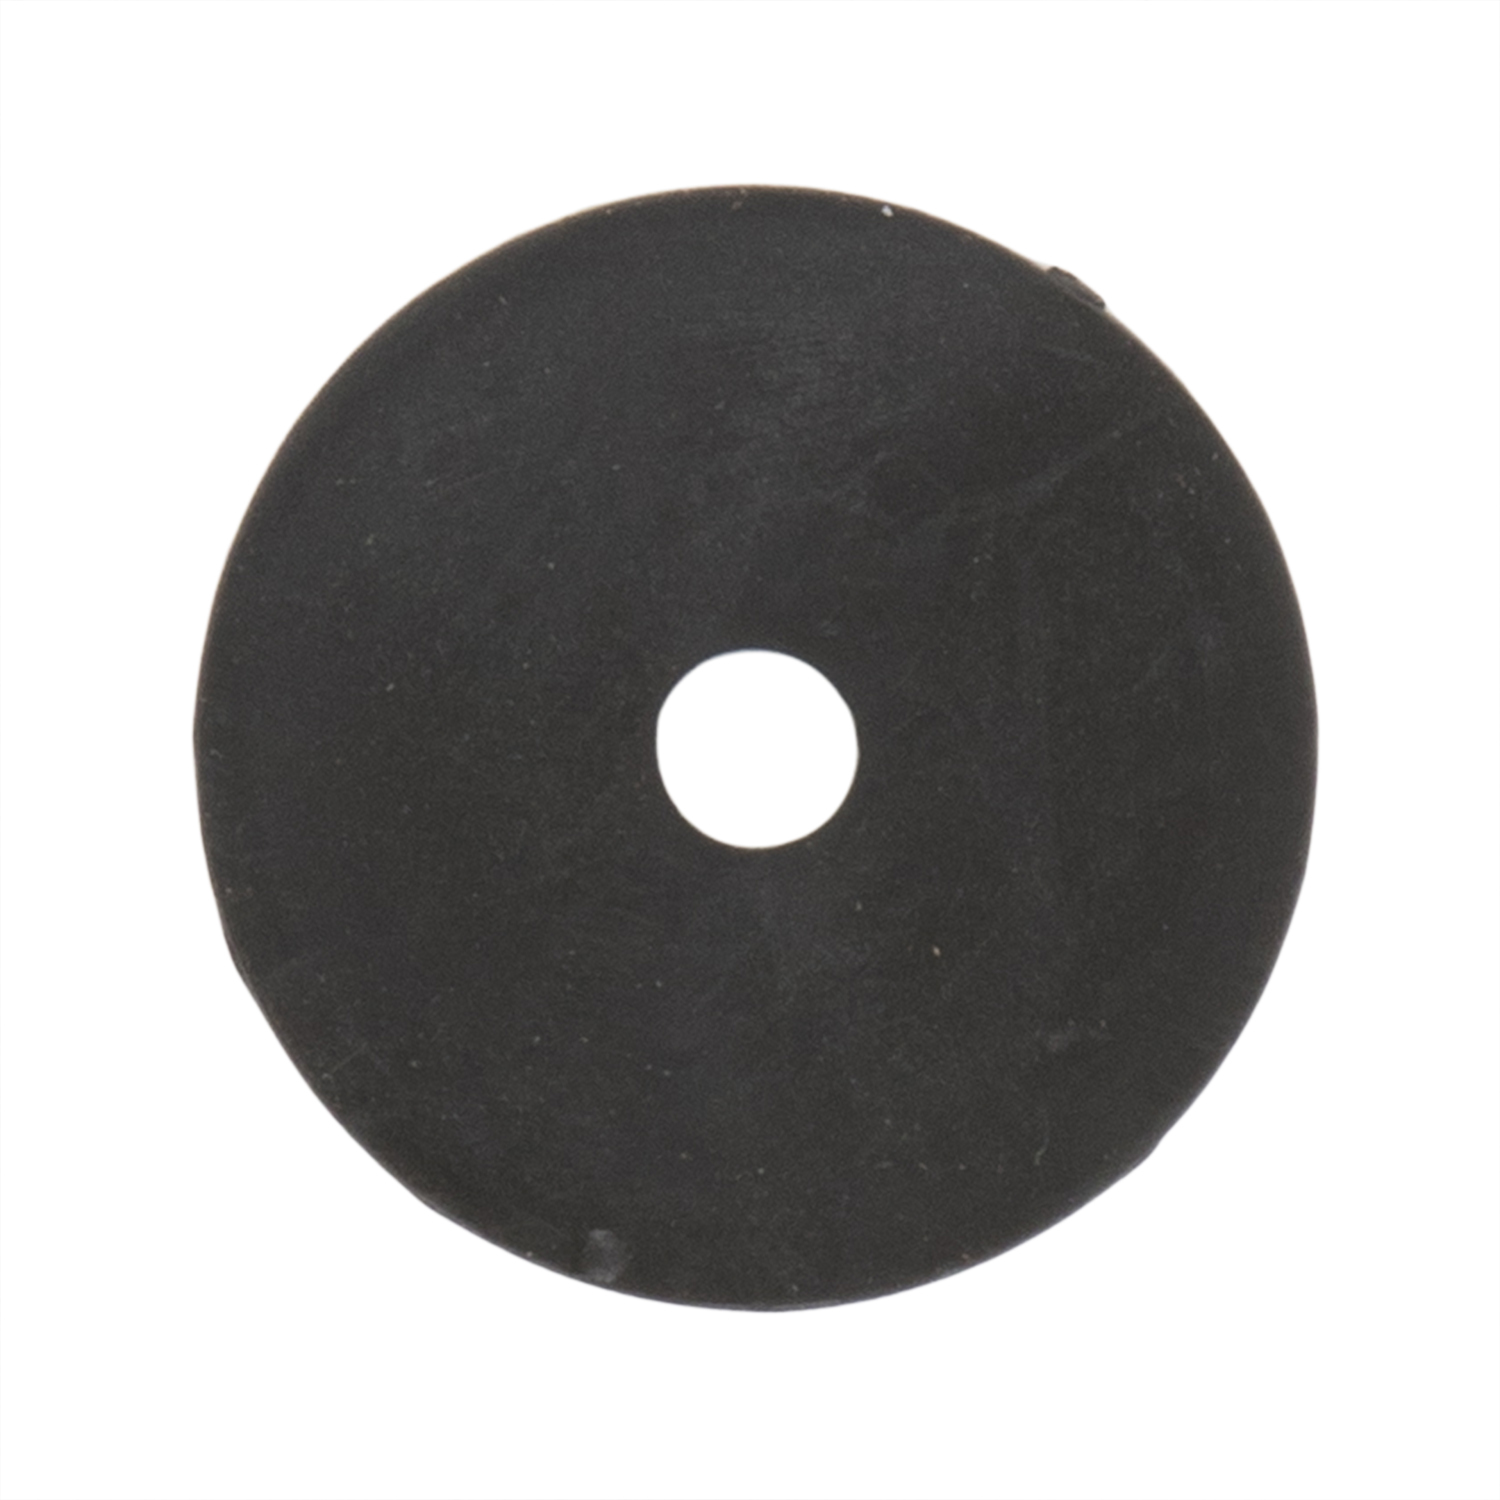 Hiatt 19mm Black Tap Washer 4 Pack Image 2